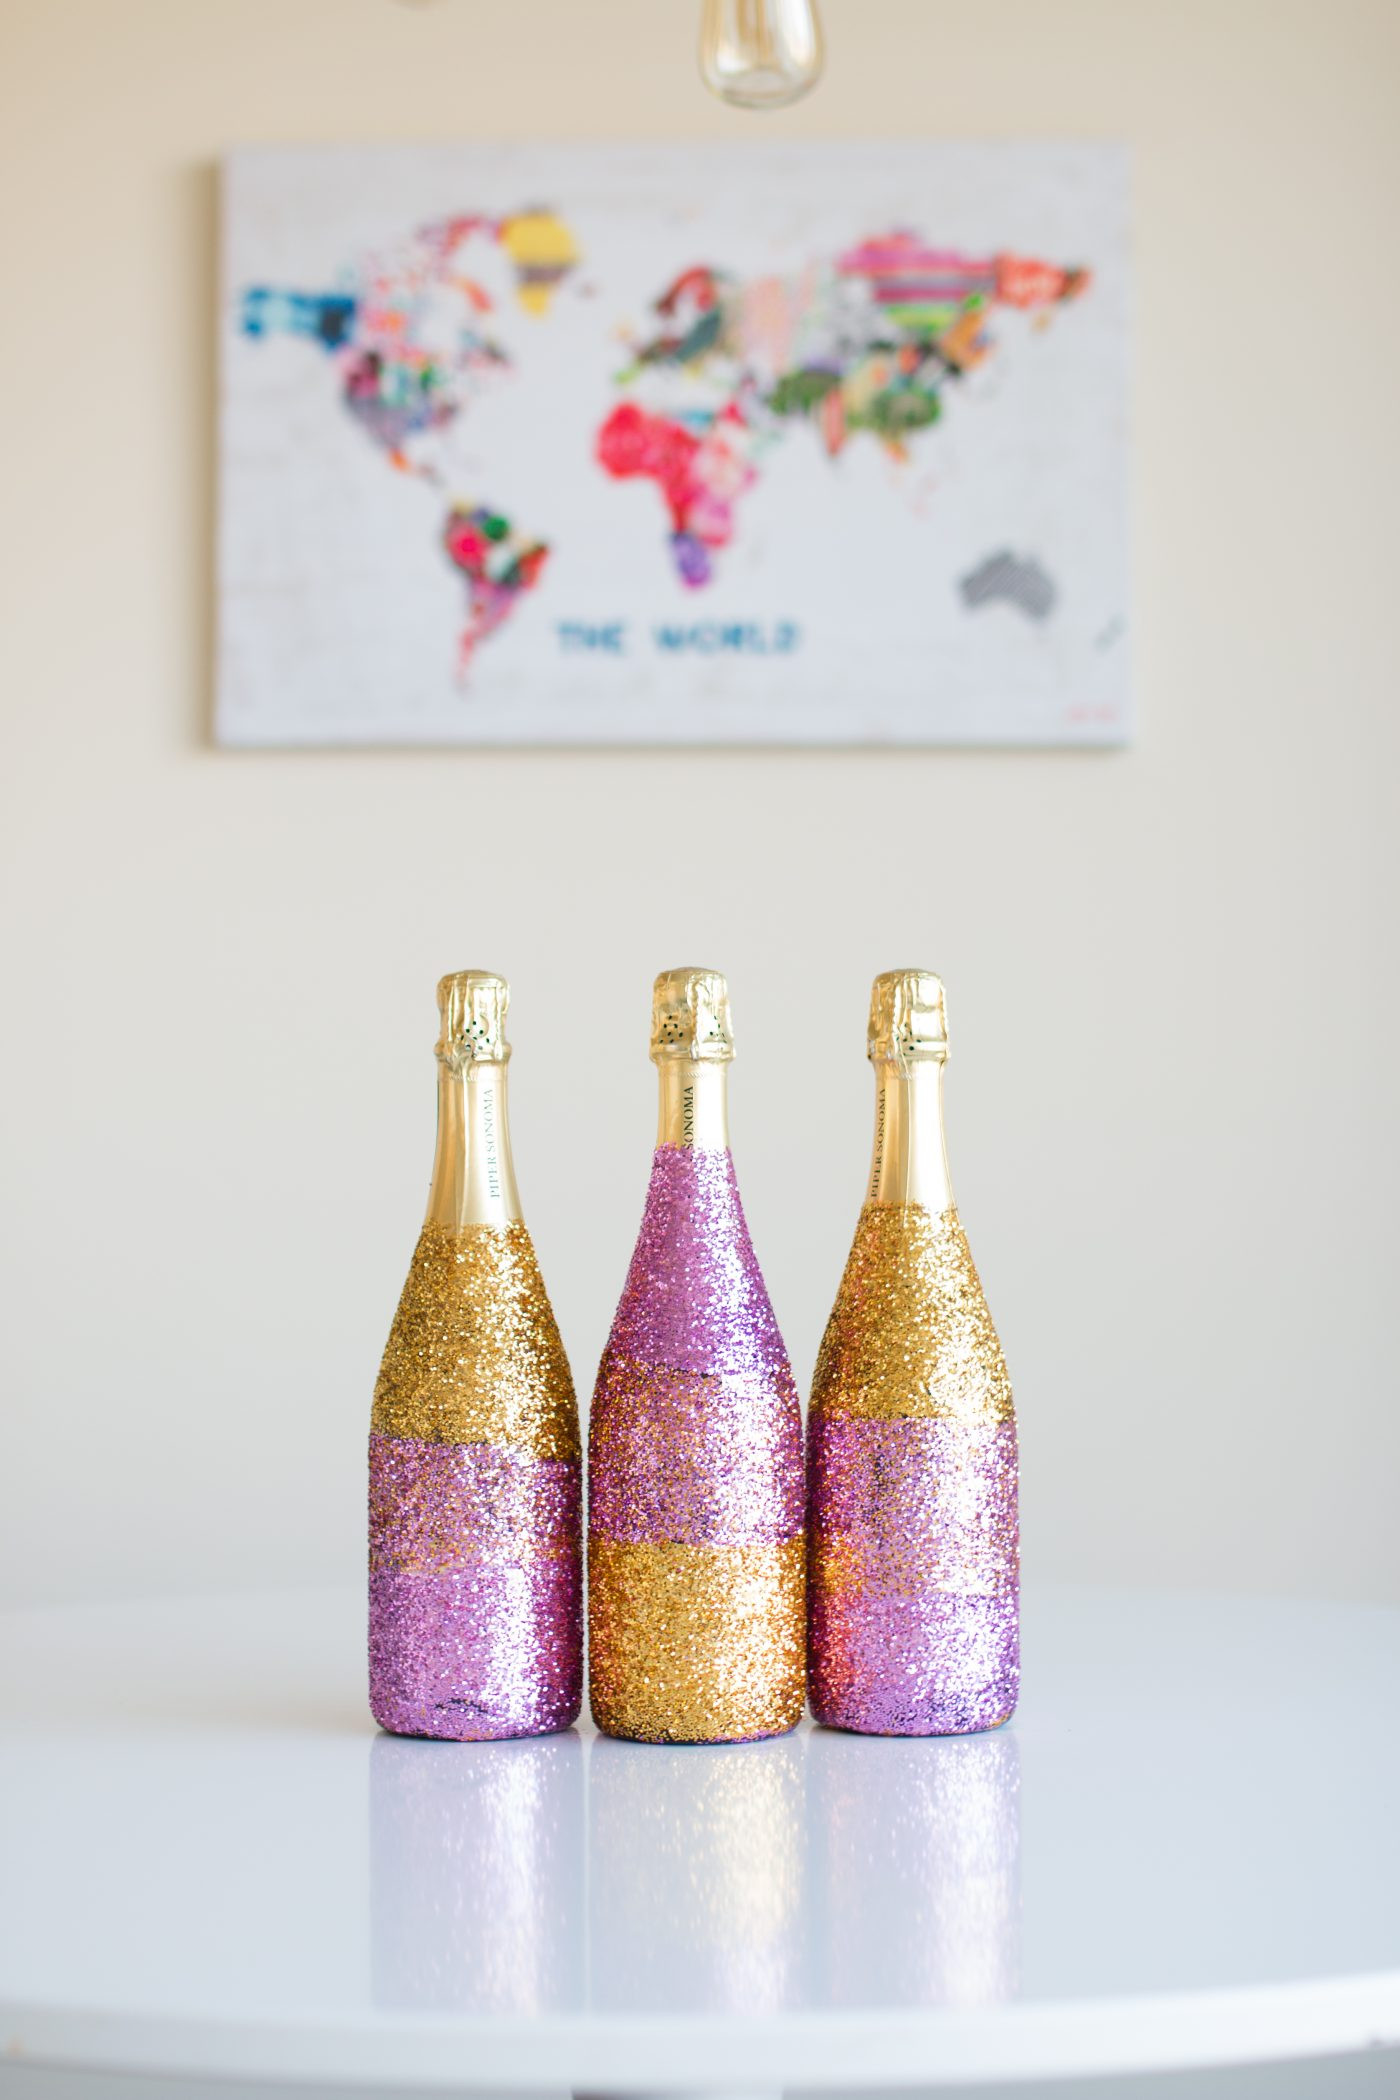 Best ideas about Glitter Bottle DIY
. Save or Pin DIY Glitter Ombré Champagne Bottle Now.